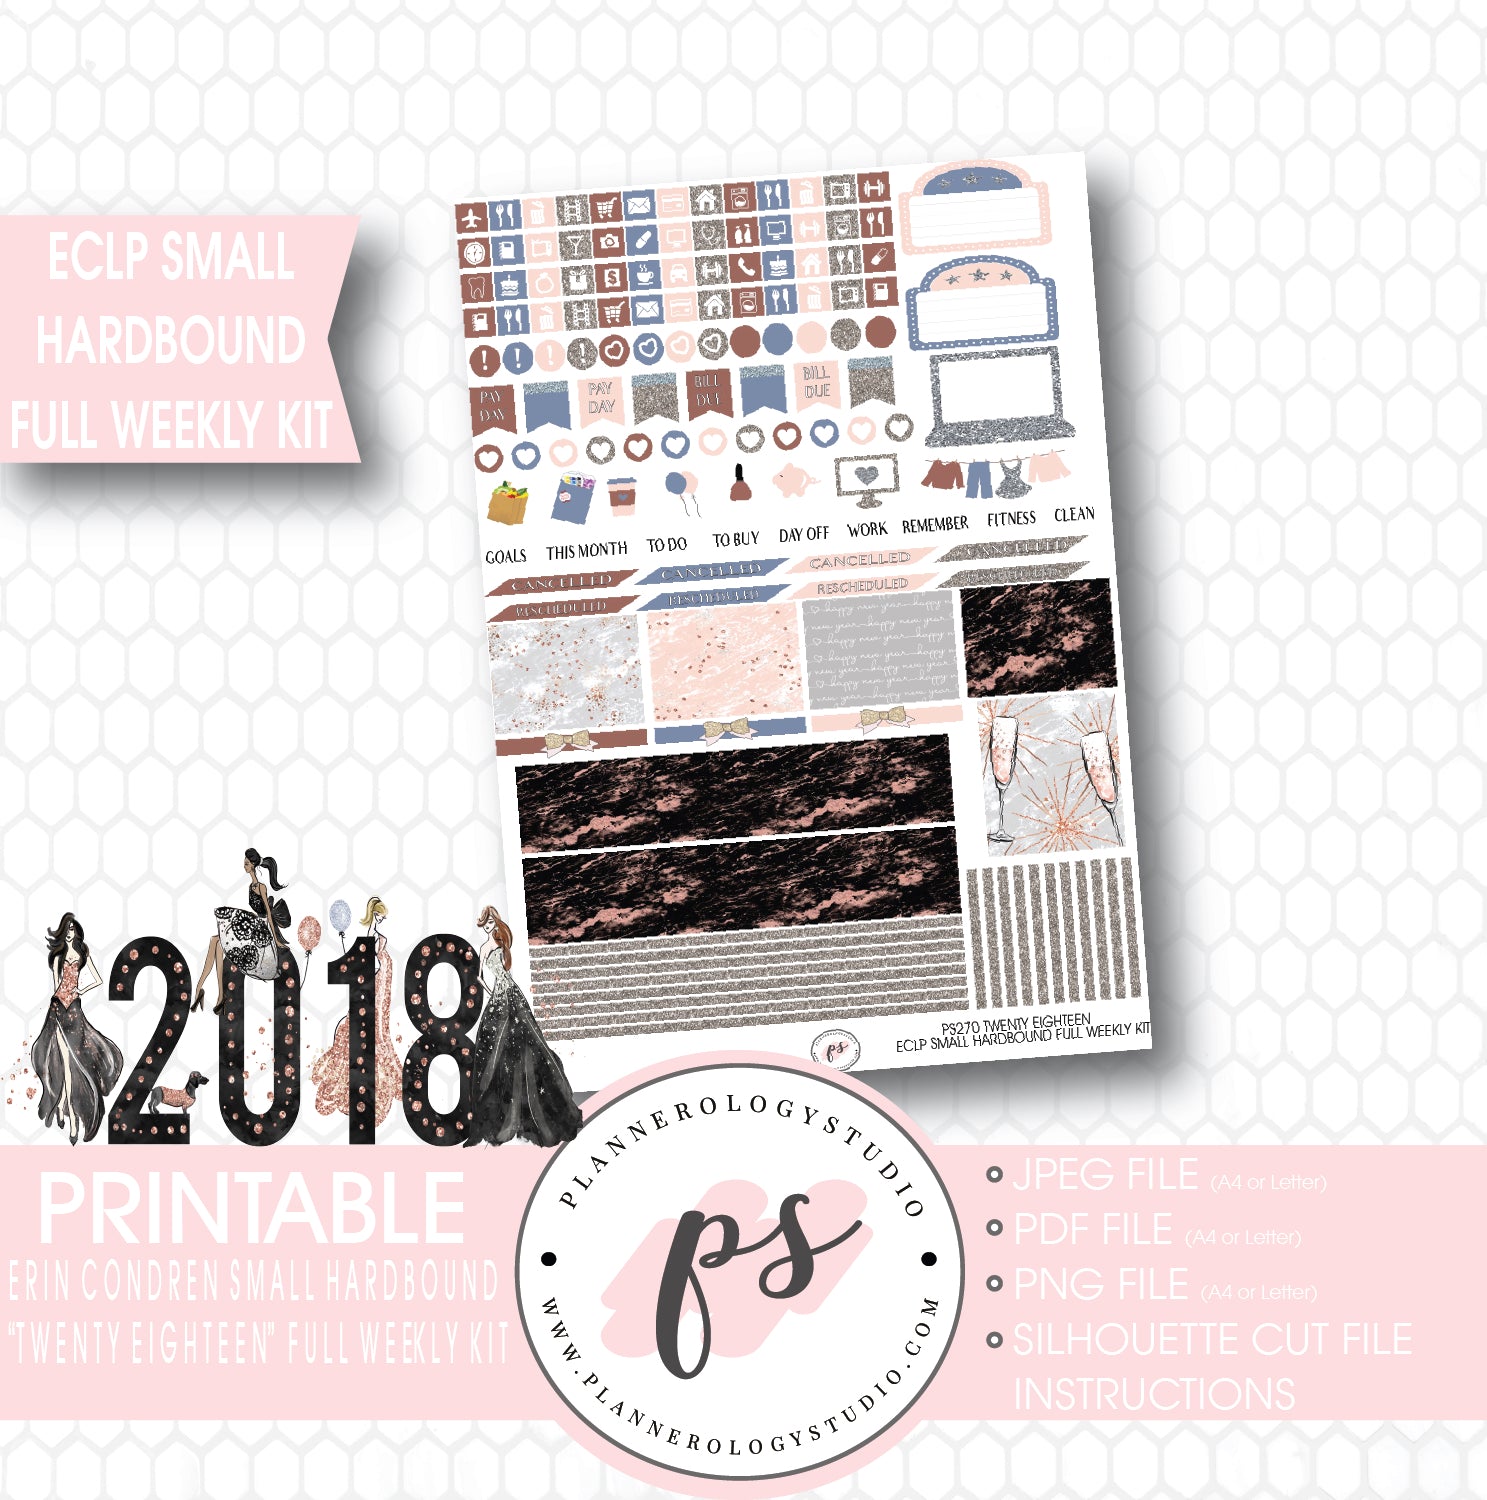 Twenty Eighteen 2018 New Year's Full Weekly Kit Printable Planner Stickers (for use with Erin Condren Small Hardbound Planner) - Plannerologystudio